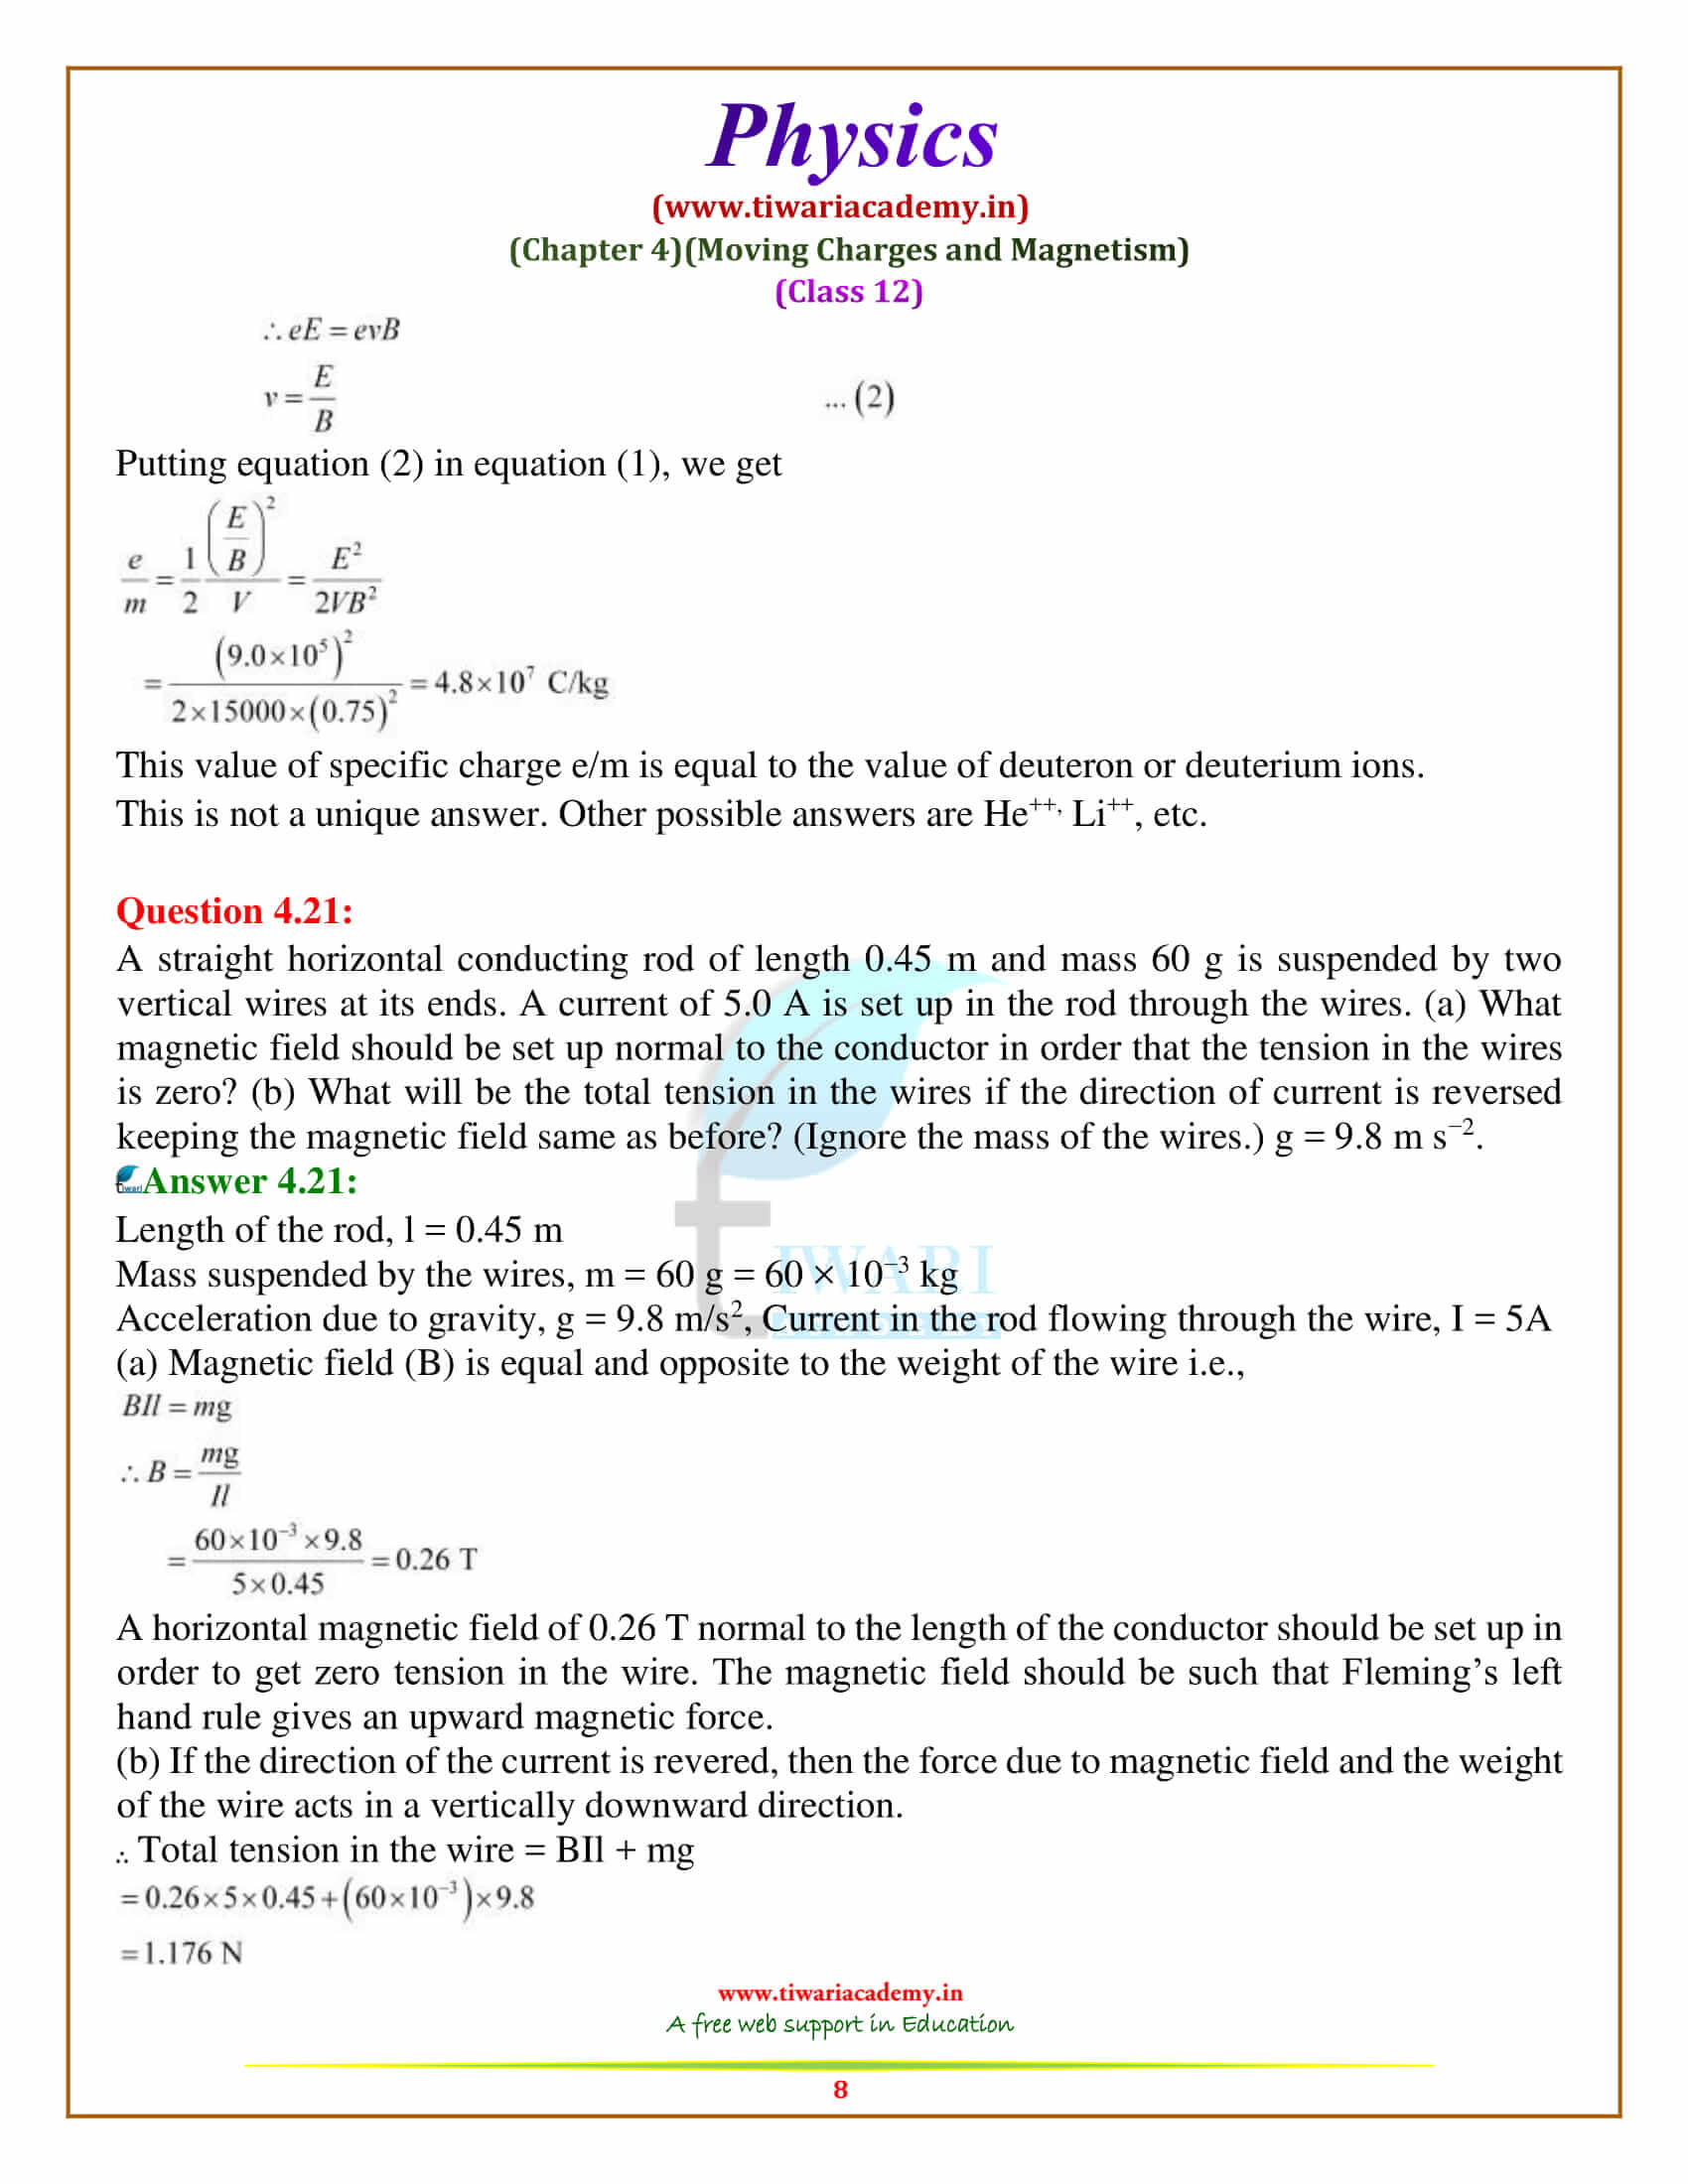 case study class 12 physics chapter 4